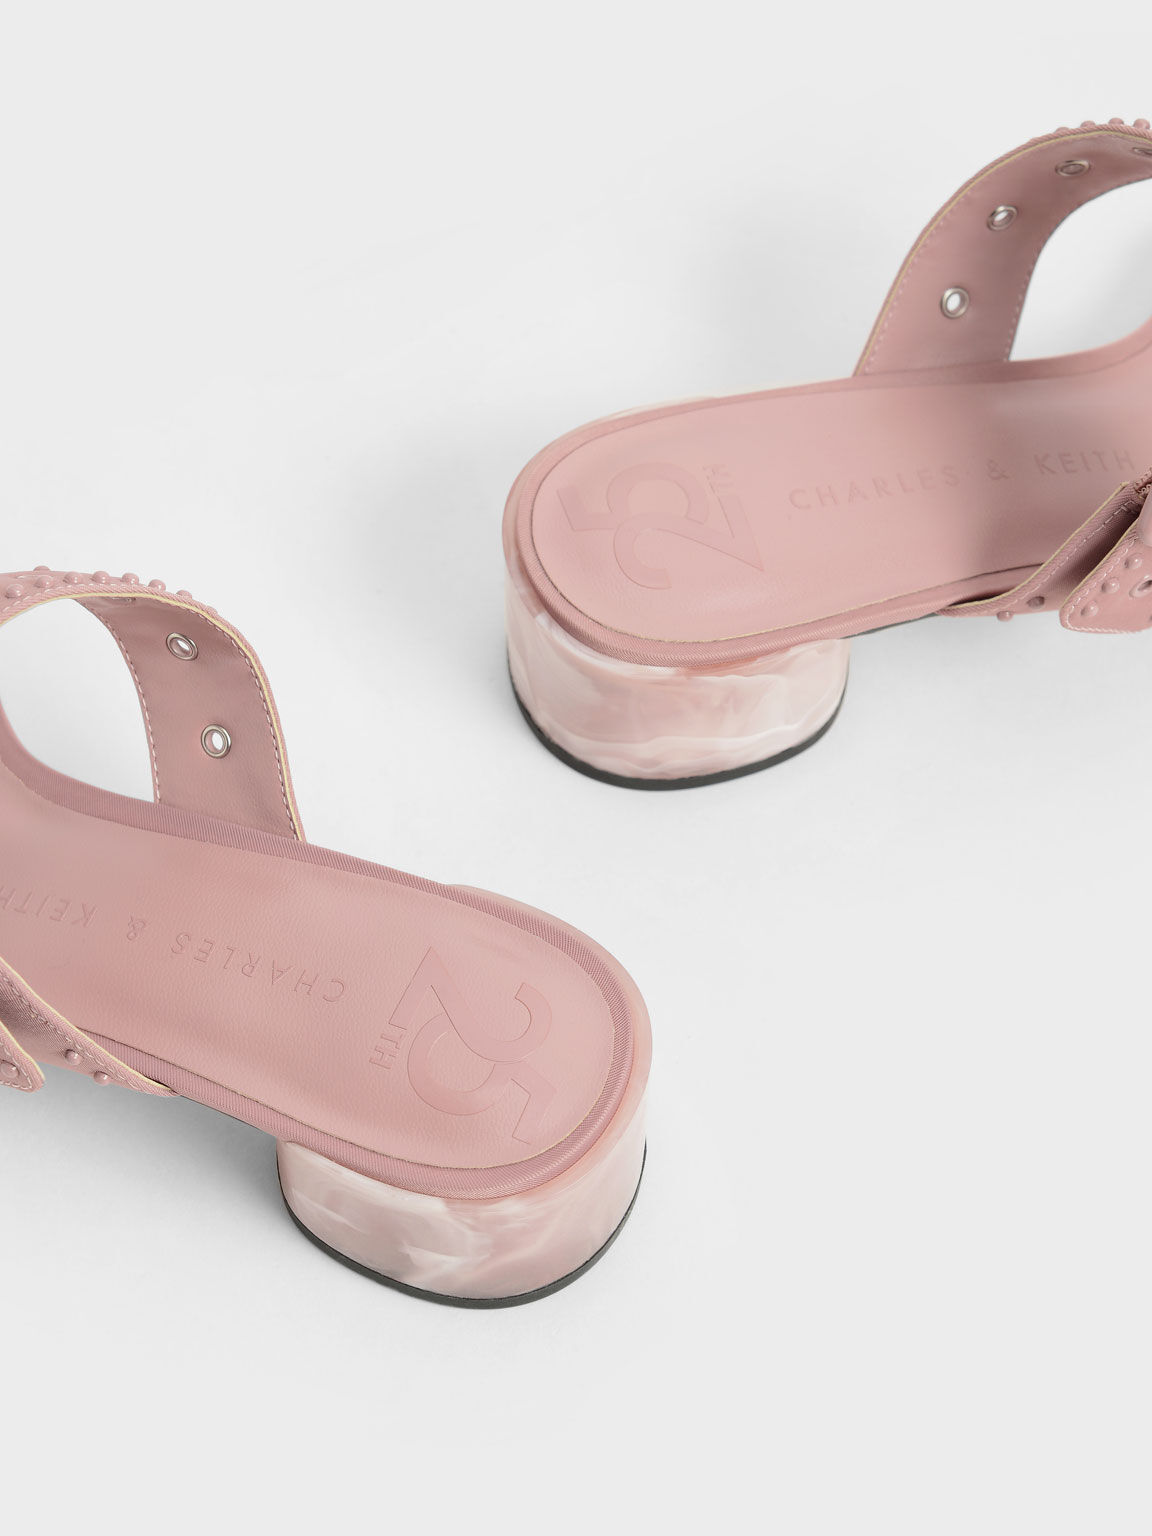 Sepphe 渲染粗跟拖鞋, 粉紅色, hi-res